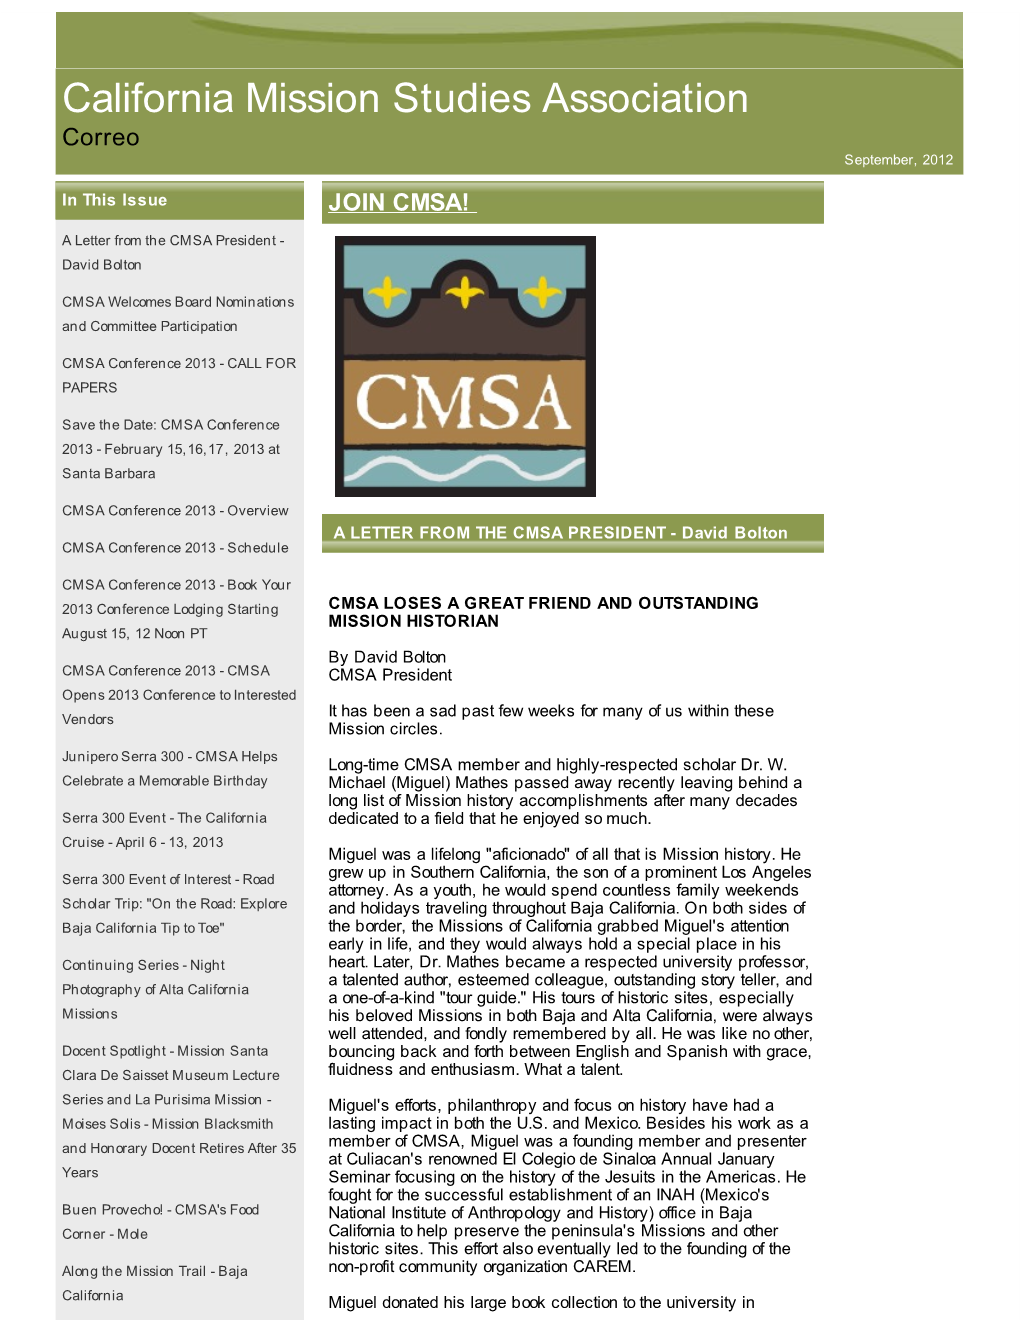 California Mission Studies Association Correo September, 2012